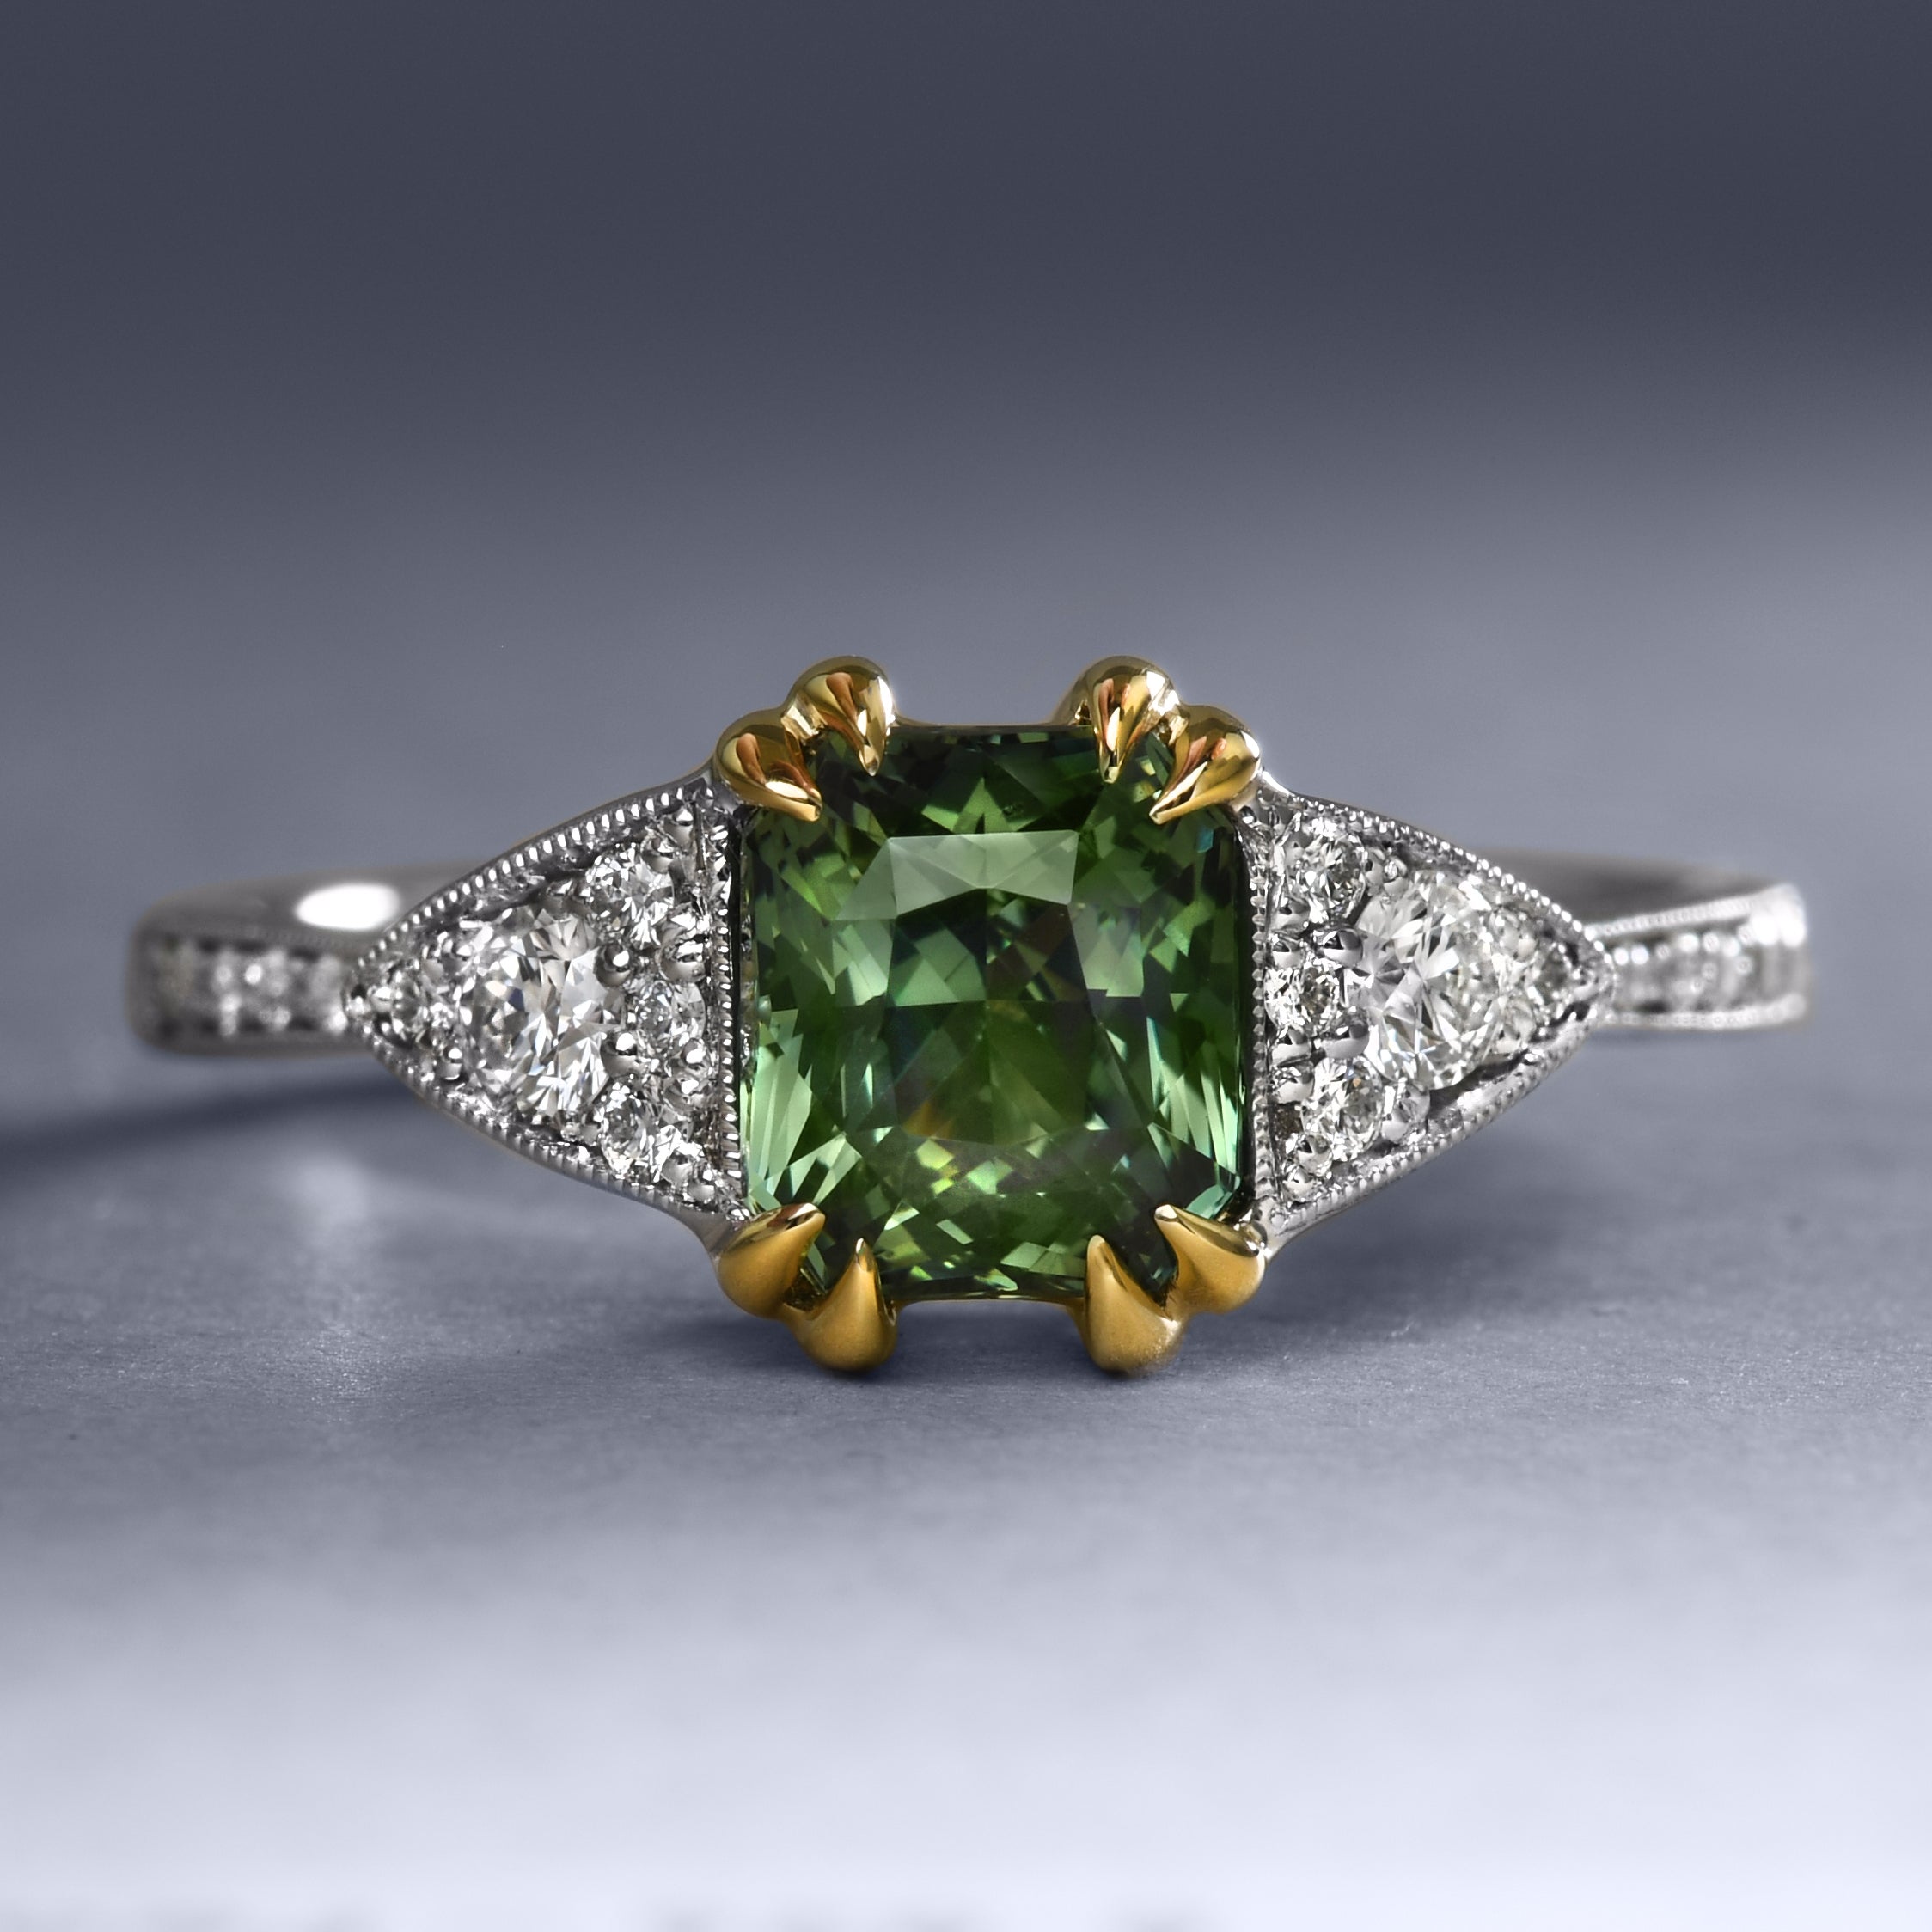 Rings - Diamond / Gold / Gemstone Rings at Plante Jewelers